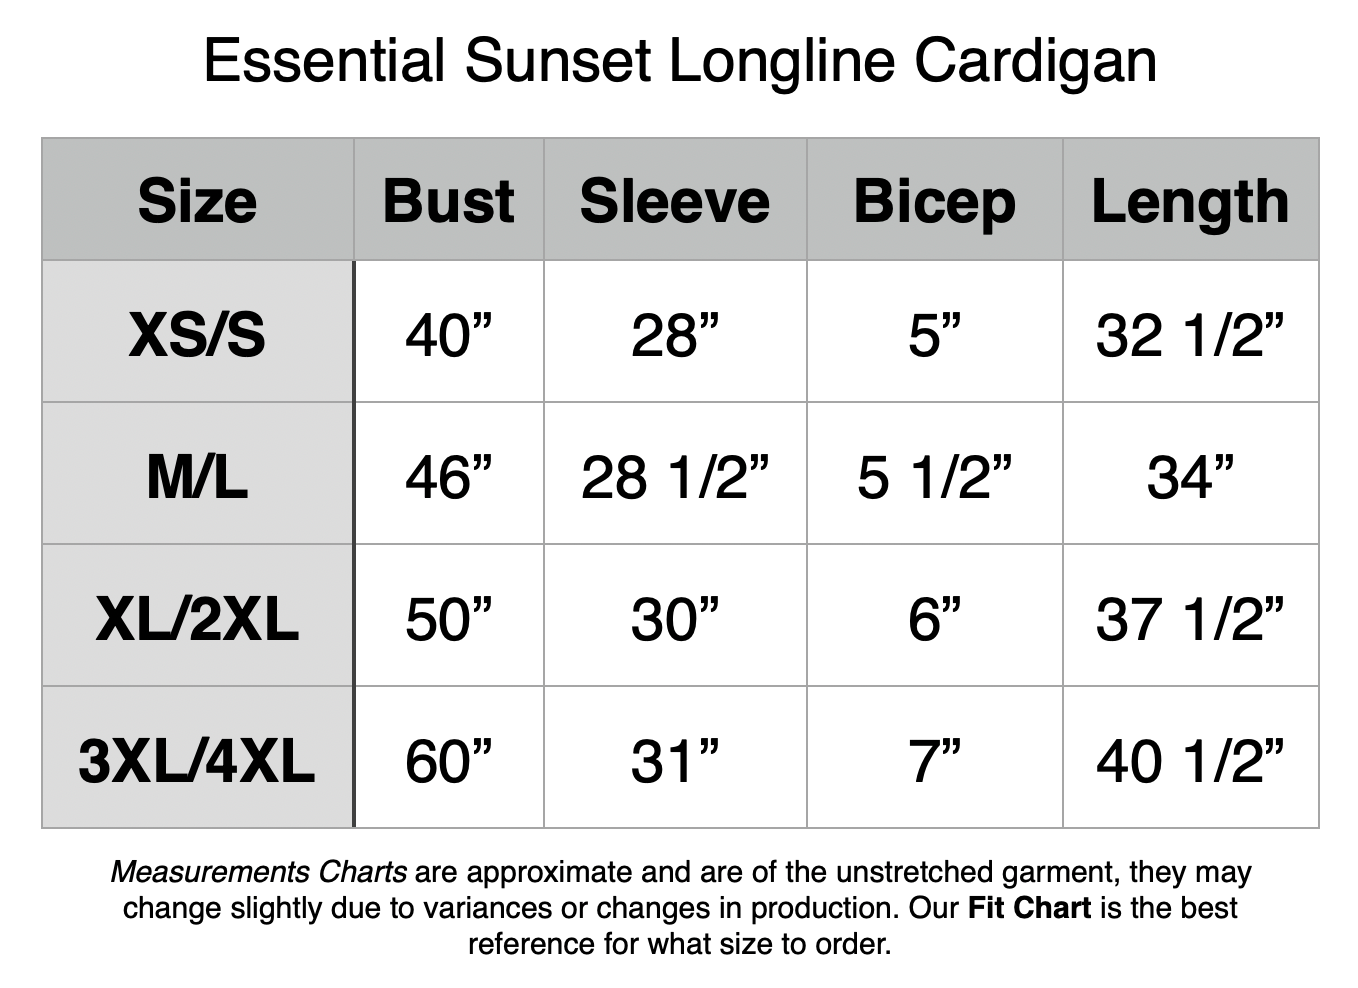 Essential Sunset Longline Cardigan: XS/S - 40” Bust, 28” Sleeve, 5” Bicep, 32.5” Length. M/L - 46” Bust, 28/5” Sleeve, 5.5” Bicep, 34” Length. XL/2XL - 50” Bust, 30” Sleeve, 6” Bicep, 37.5” Length. 3XL/4XL - 60” Bust, 31” Sleeve, 7” Bicep, 40.5” Length.